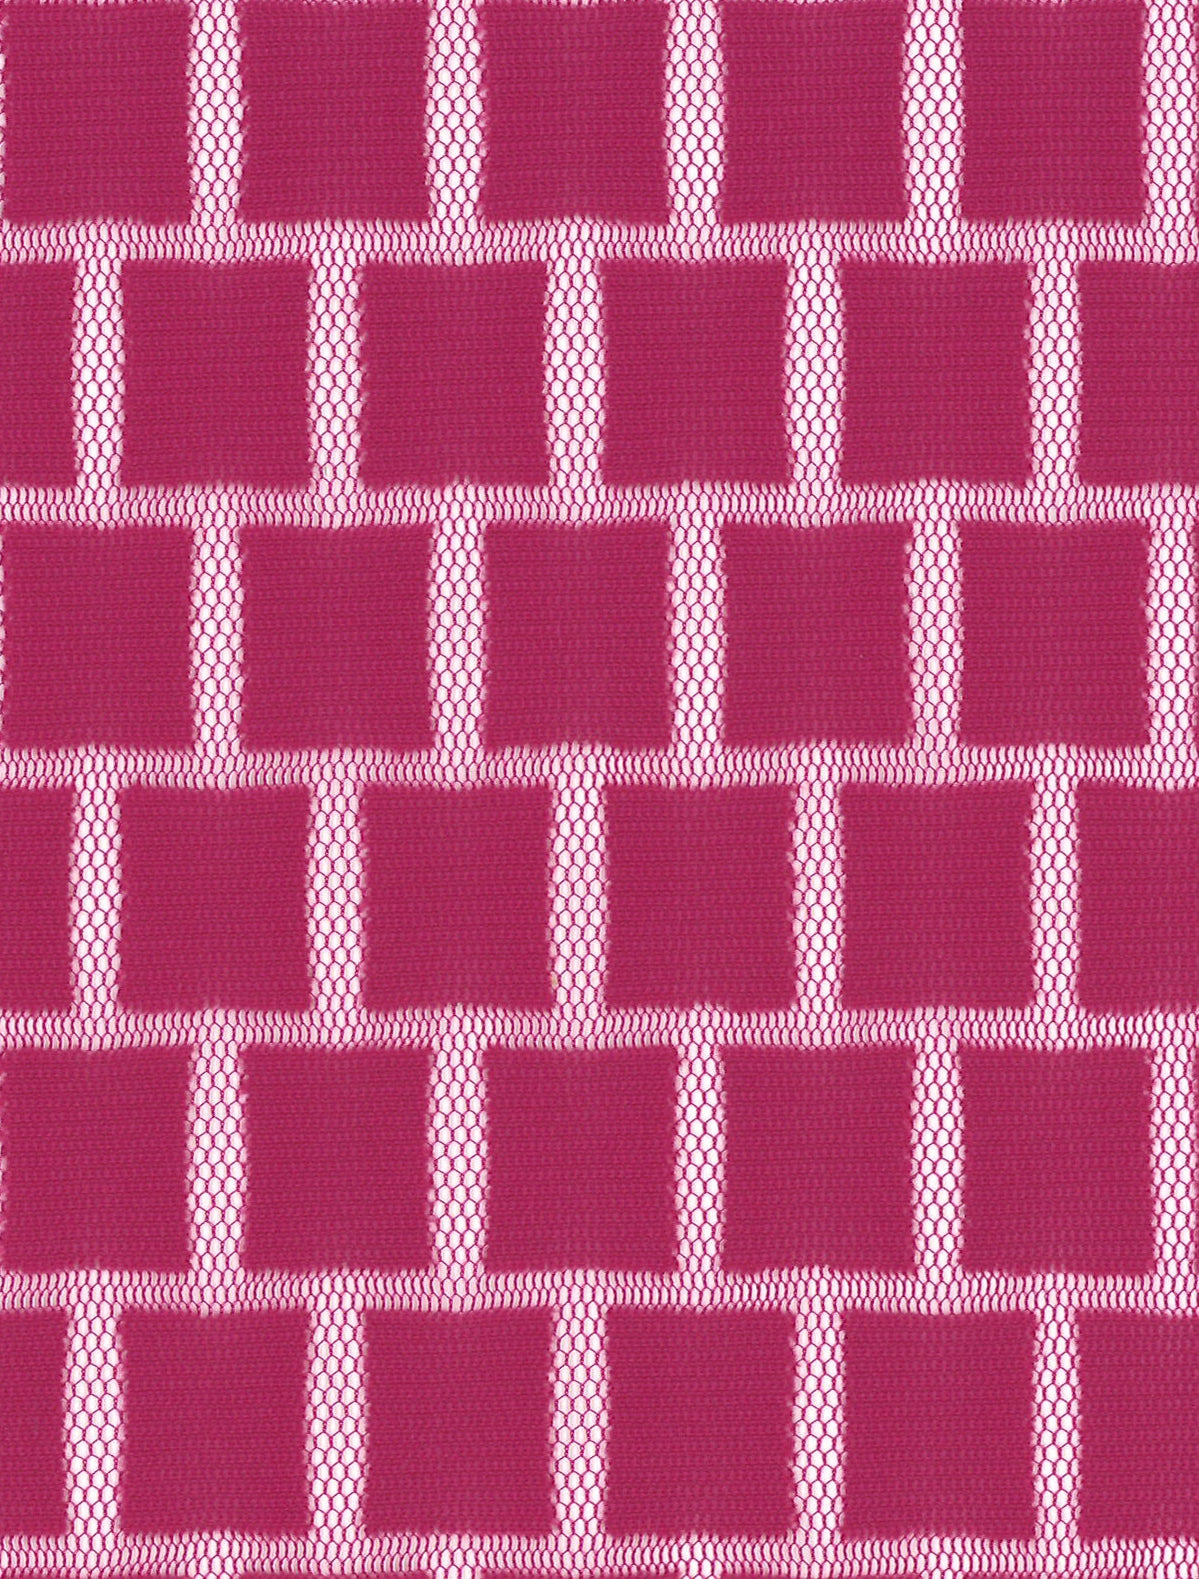 14029-02 Royal Fuchsia Knit Mesh Square Pattern Burn-Out Plain Dyed Blend blend burn-out knit mesh nylon pink plain dyed polyester Burn-Out, Mesh - knit fabric - woven fabric - fabric company - fabric wholesale - fabric b2b - fabric factory - high quality fabric - hong kong fabric - fabric hk - acetate fabric - cotton fabric - linen fabric - metallic fabric - nylon fabric - polyester fabric - spandex fabric - chun wing hing - cwh hk - fabric worldwide ship - 針織布 - 梳織布 - 布料公司- 布料批發 - 香港布料 - 秦榮興